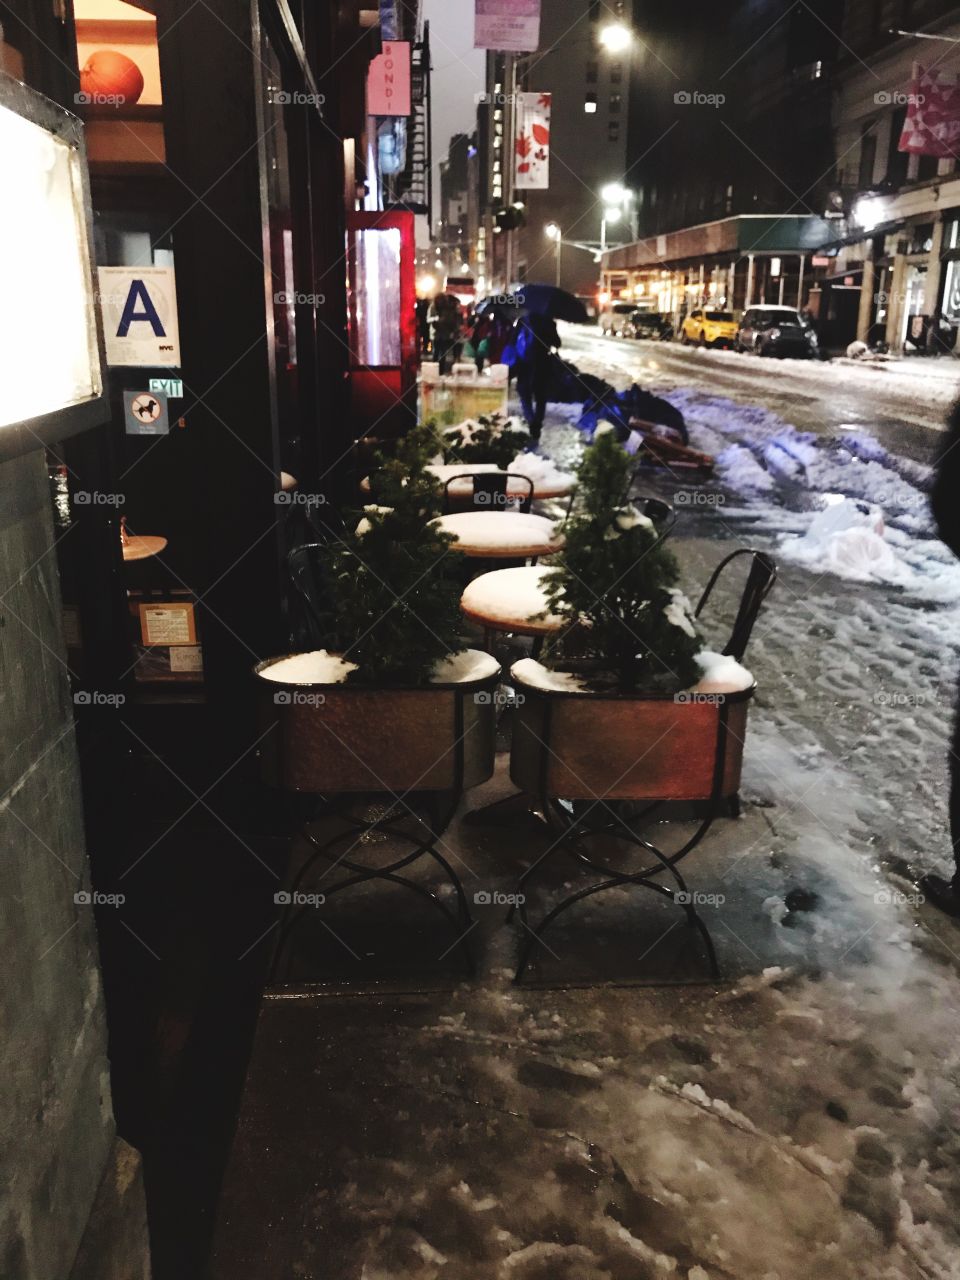 Sidewalk cafe on West 28th Street after the freak November blizzard.